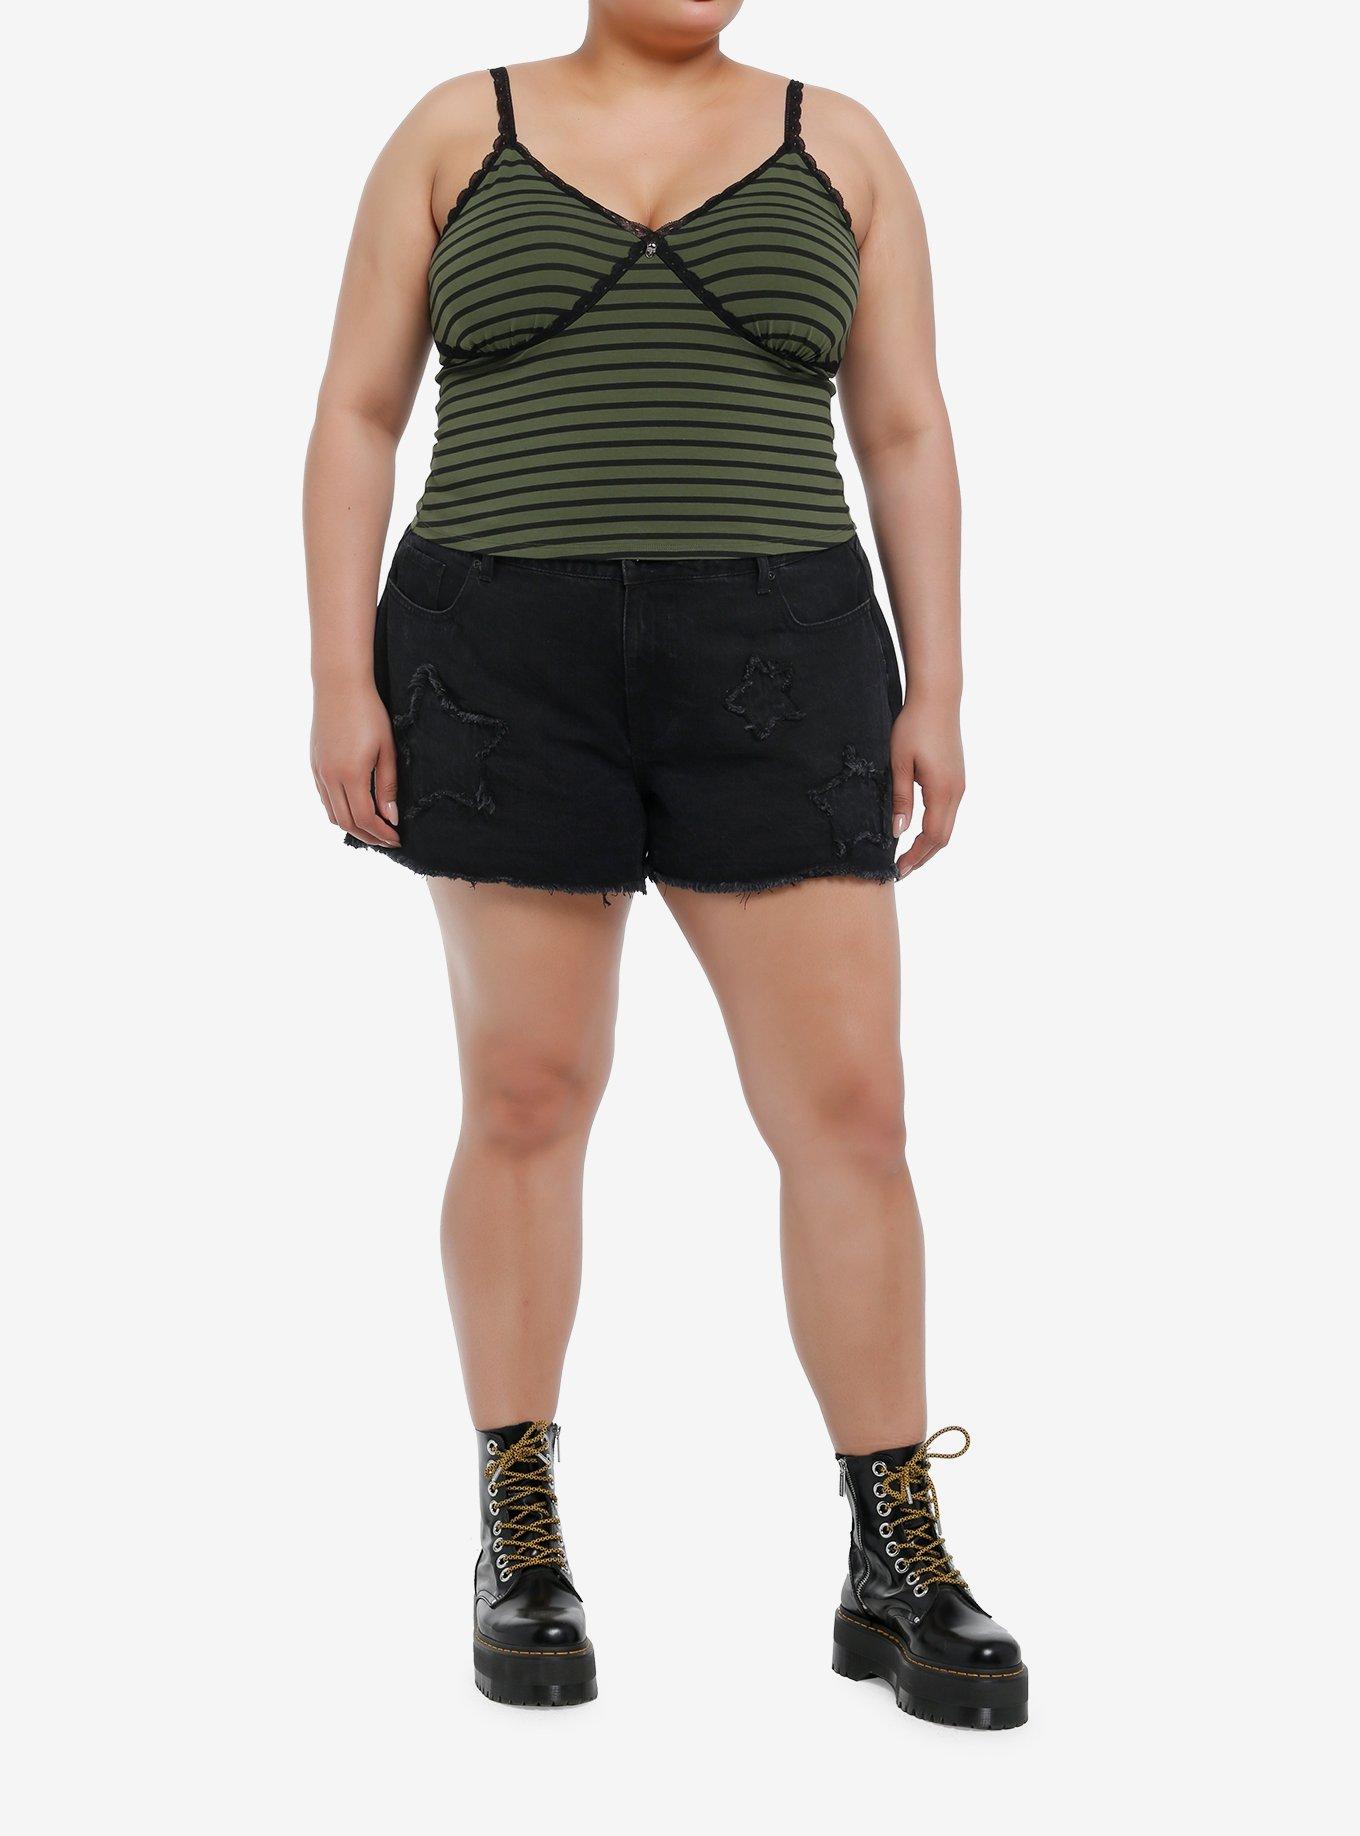 Thorn & Fable Green & Black Stripe Lace Trim Girls Cami Plus Size, BLACK, alternate